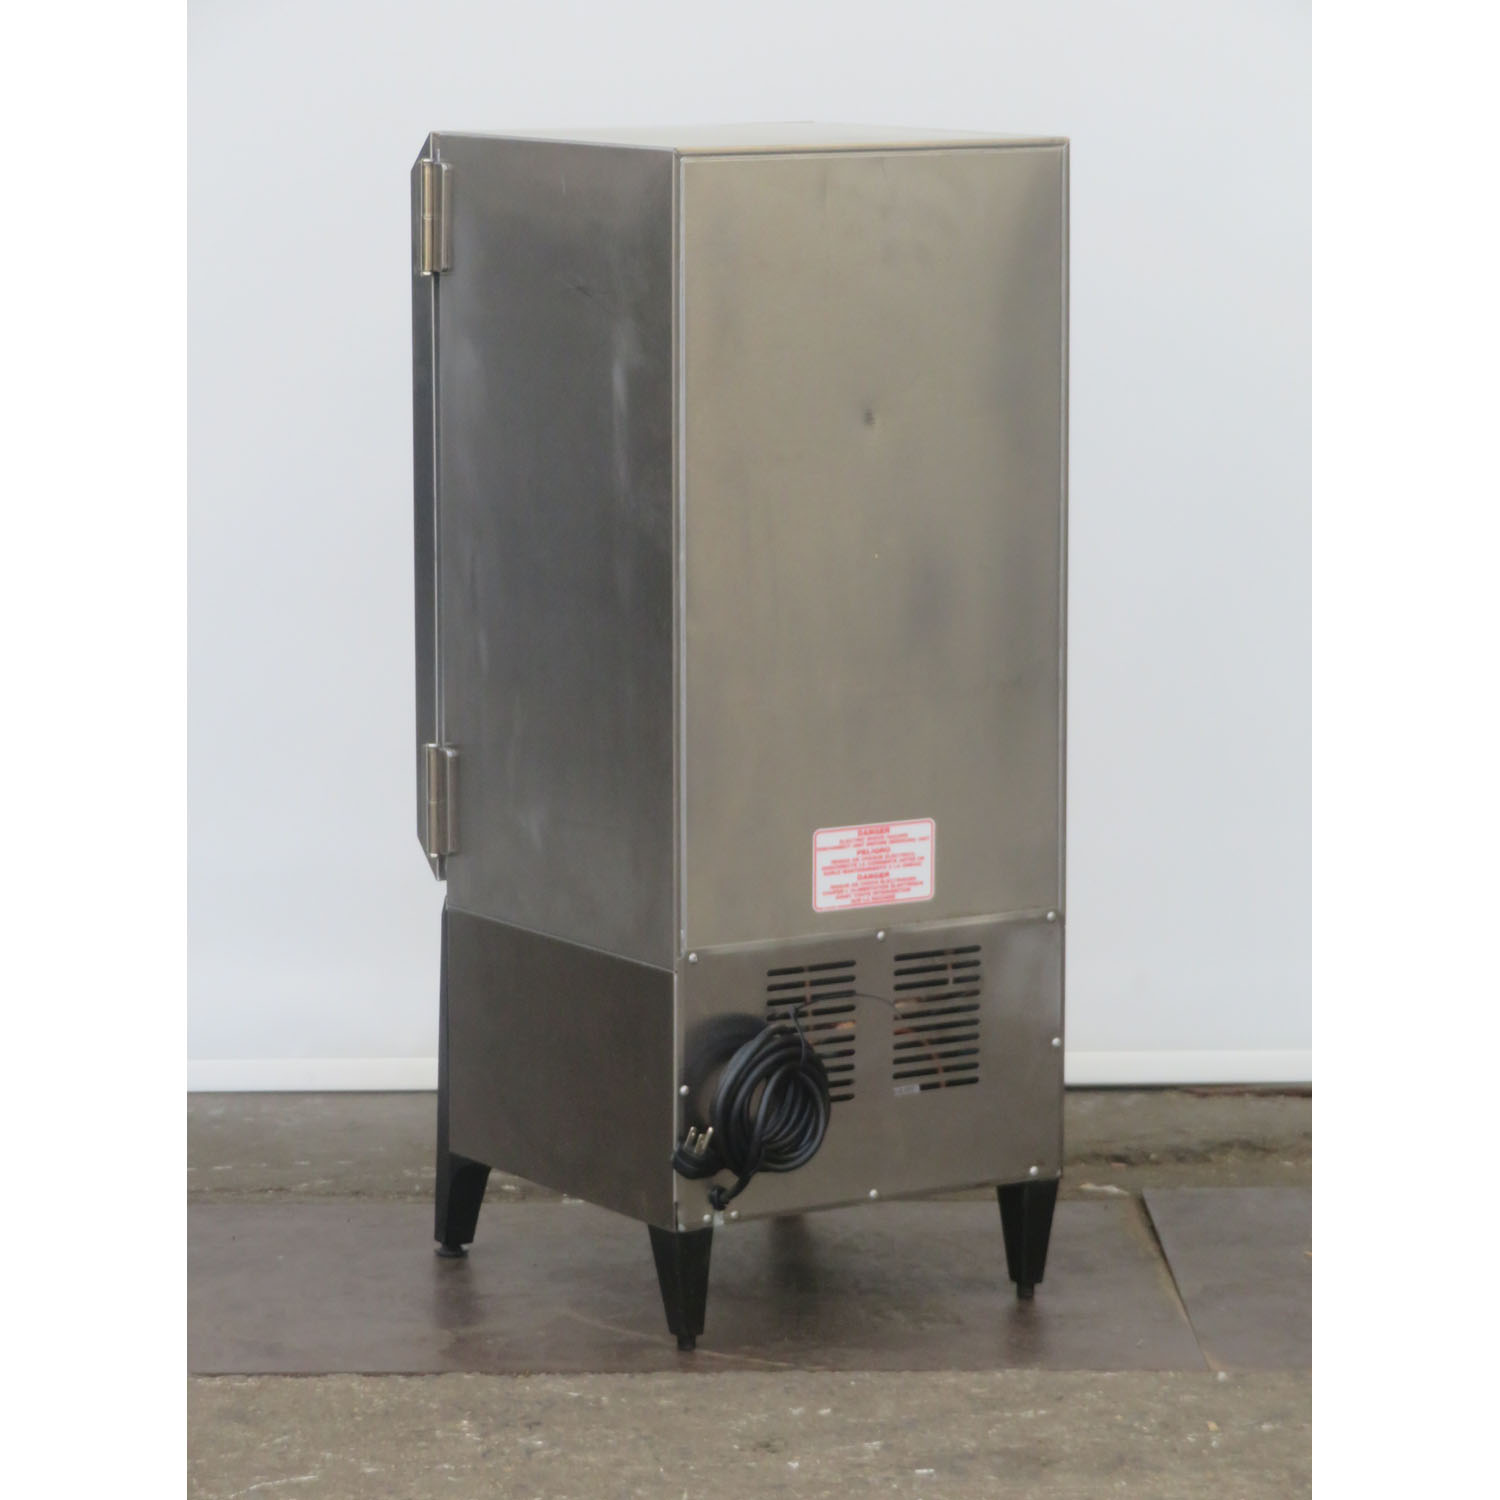 Silver King SKMAJ1-C4 Milk Dispenser, Used Excellent Condition image 2